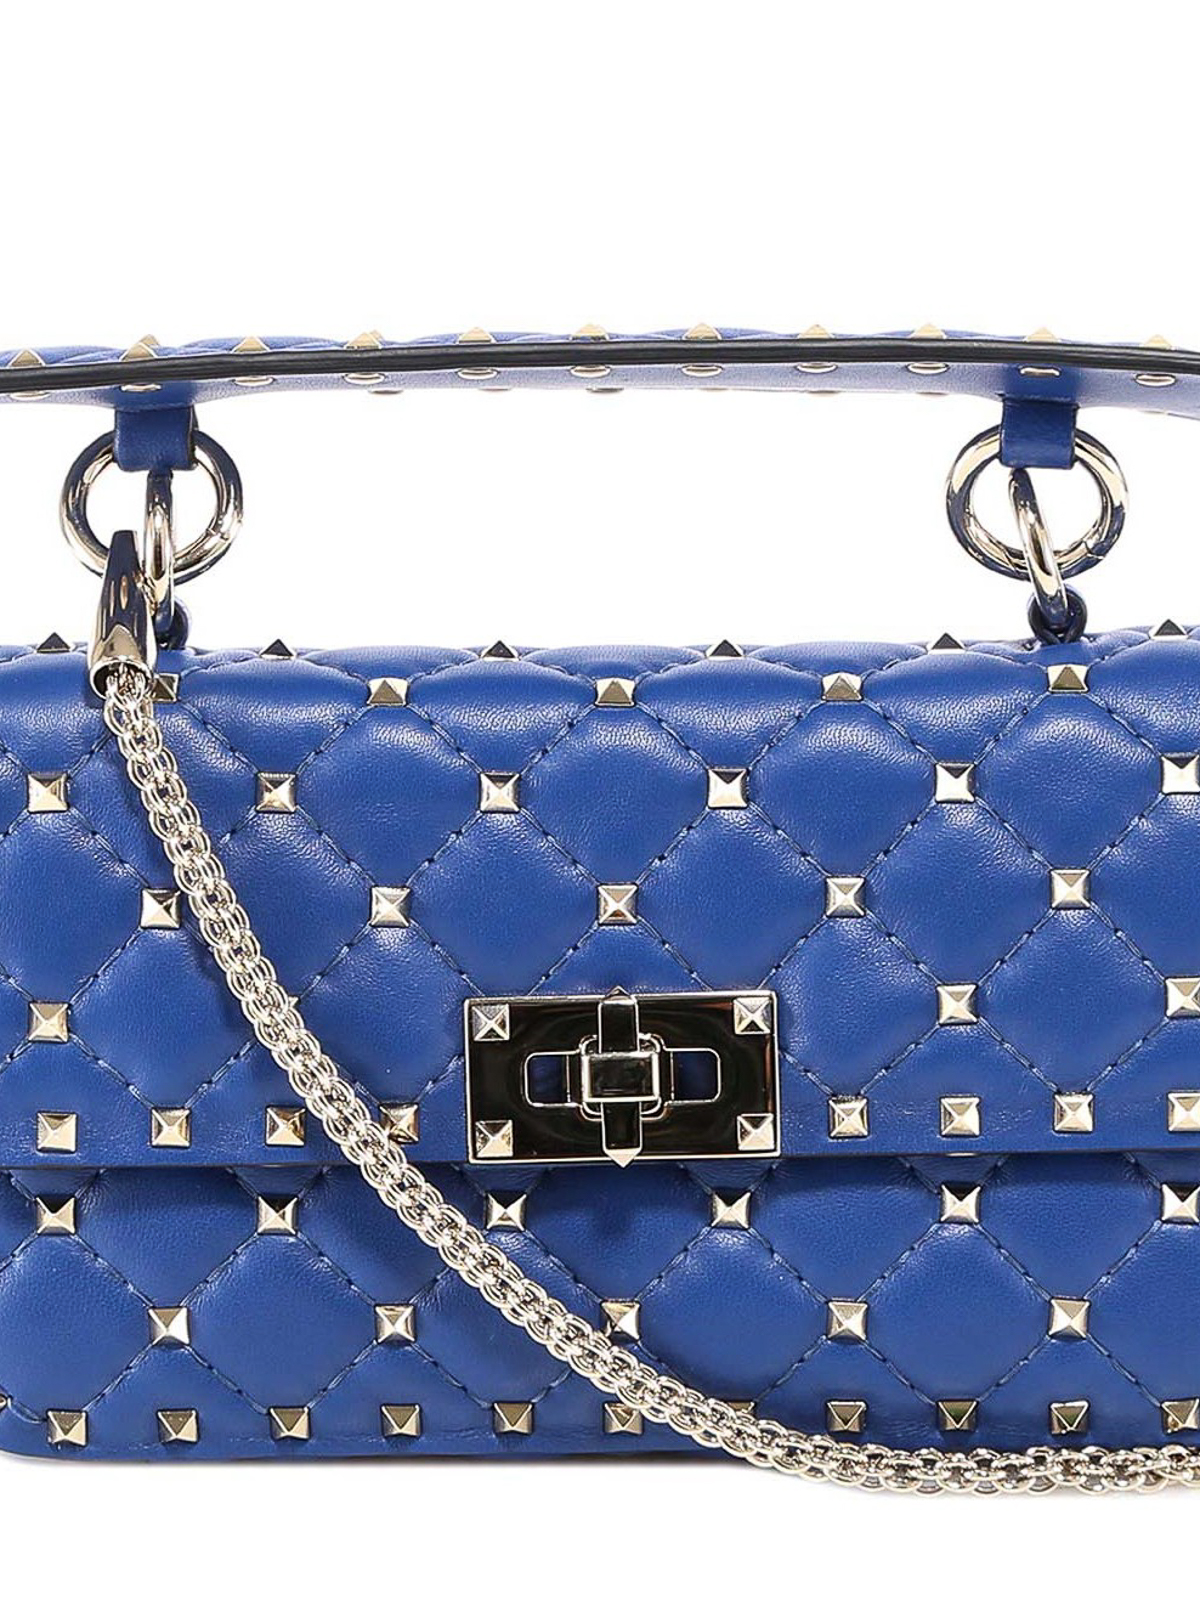 Valentino Garavani Crystal-embellished Rockstud Spike Bag